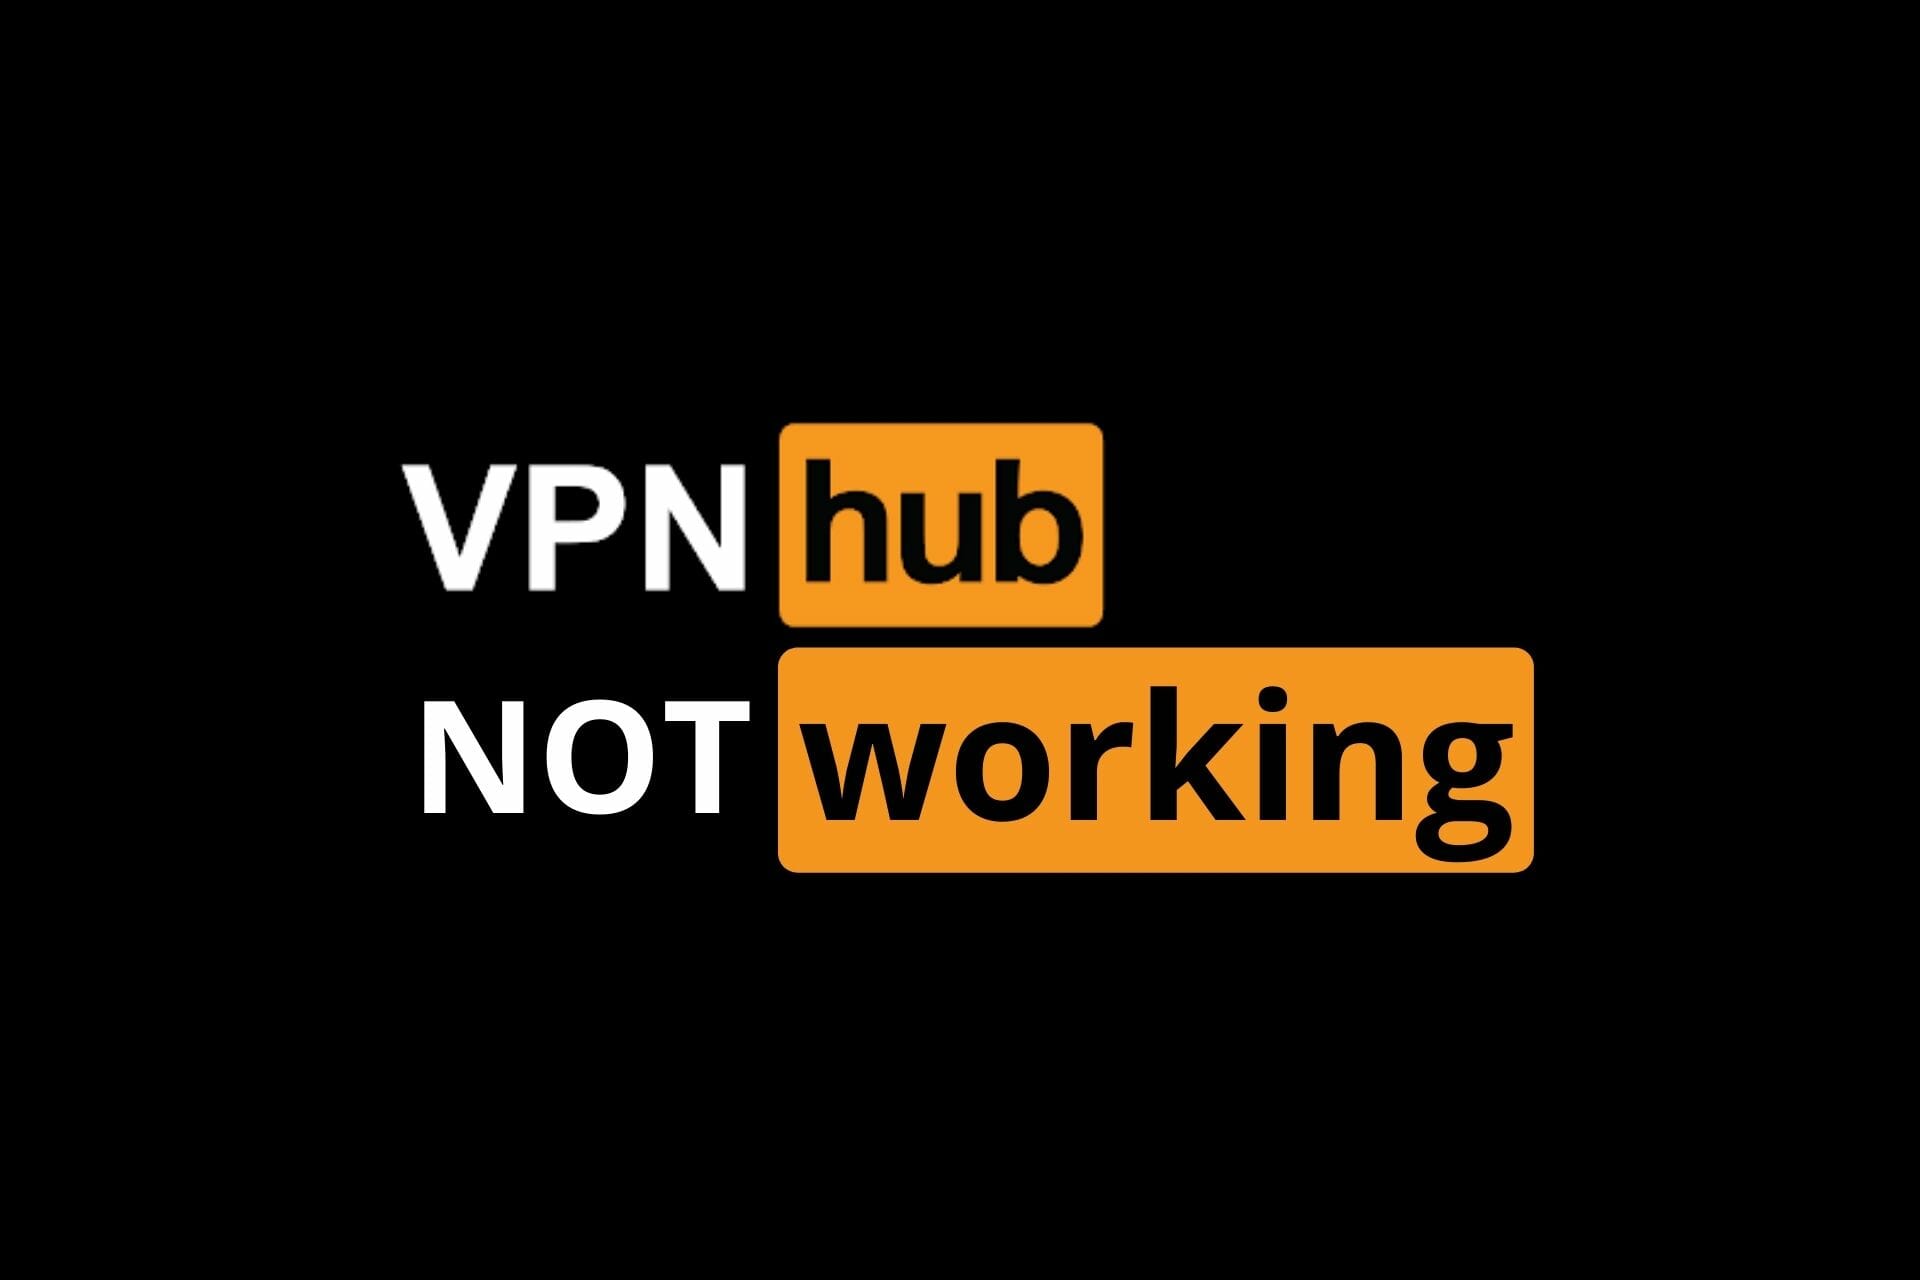 VPNhub not working